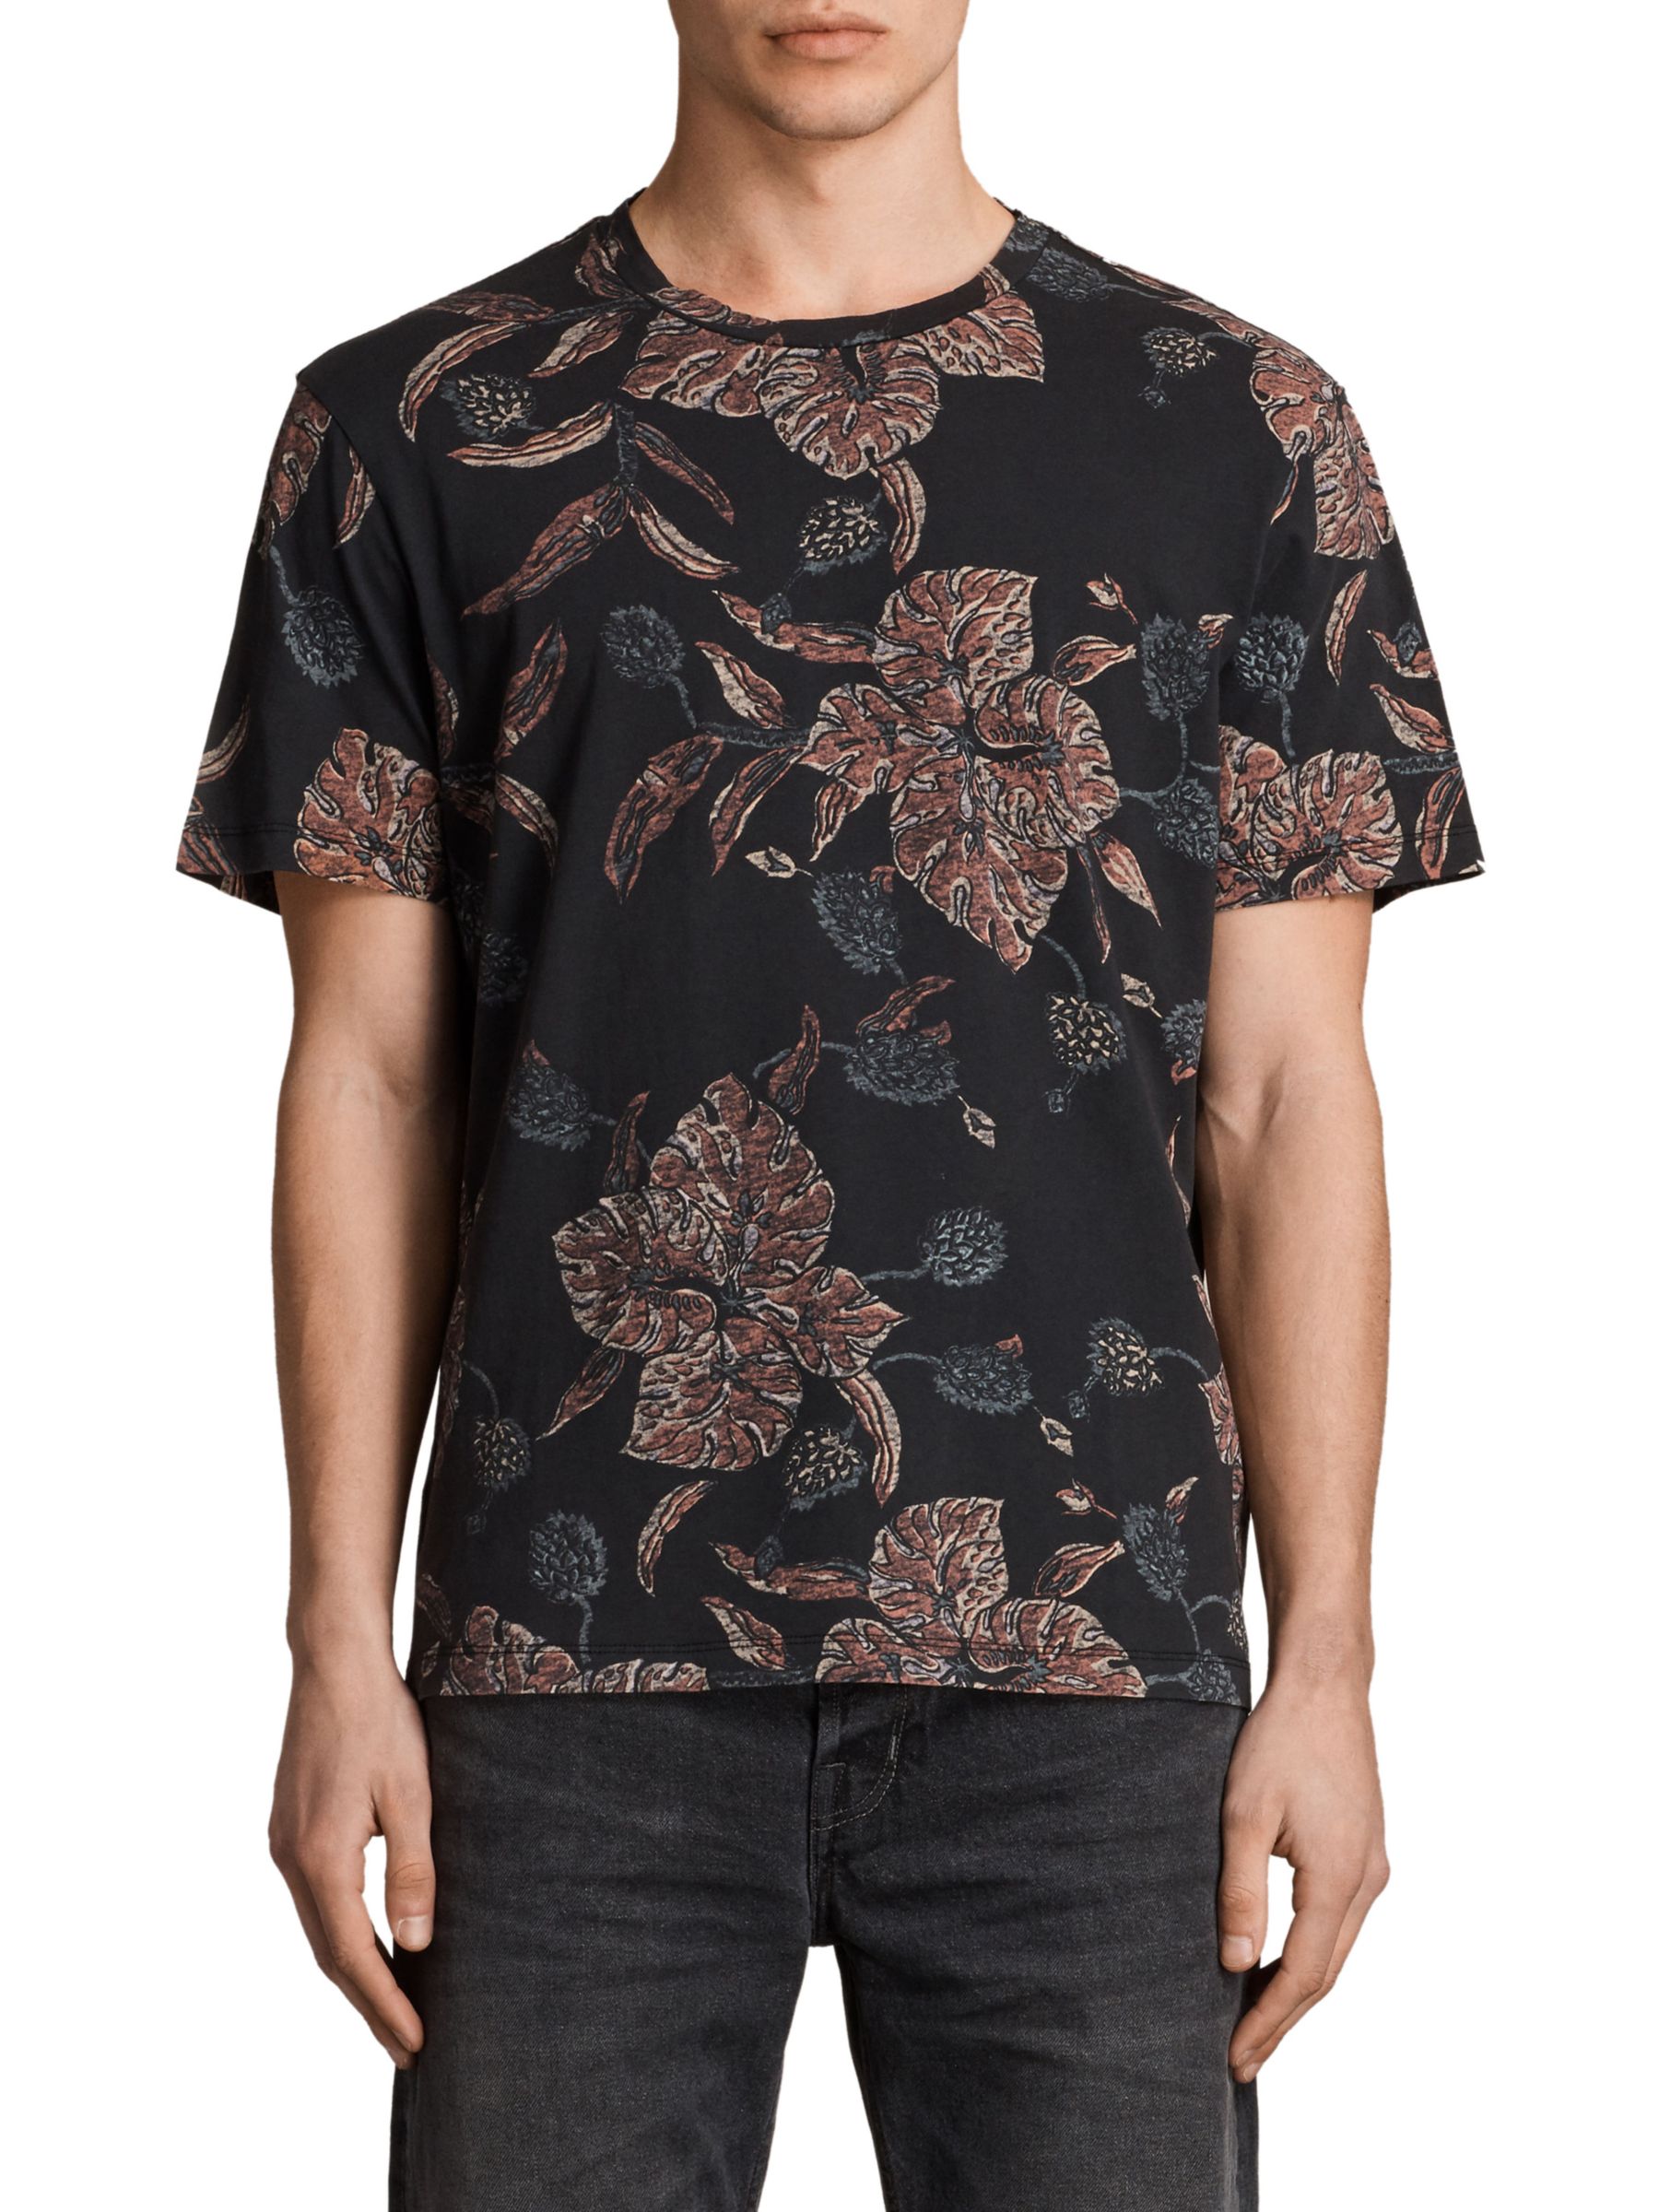 AllSaints Kauai Short Sleeve T-Shirt, Vintage Black